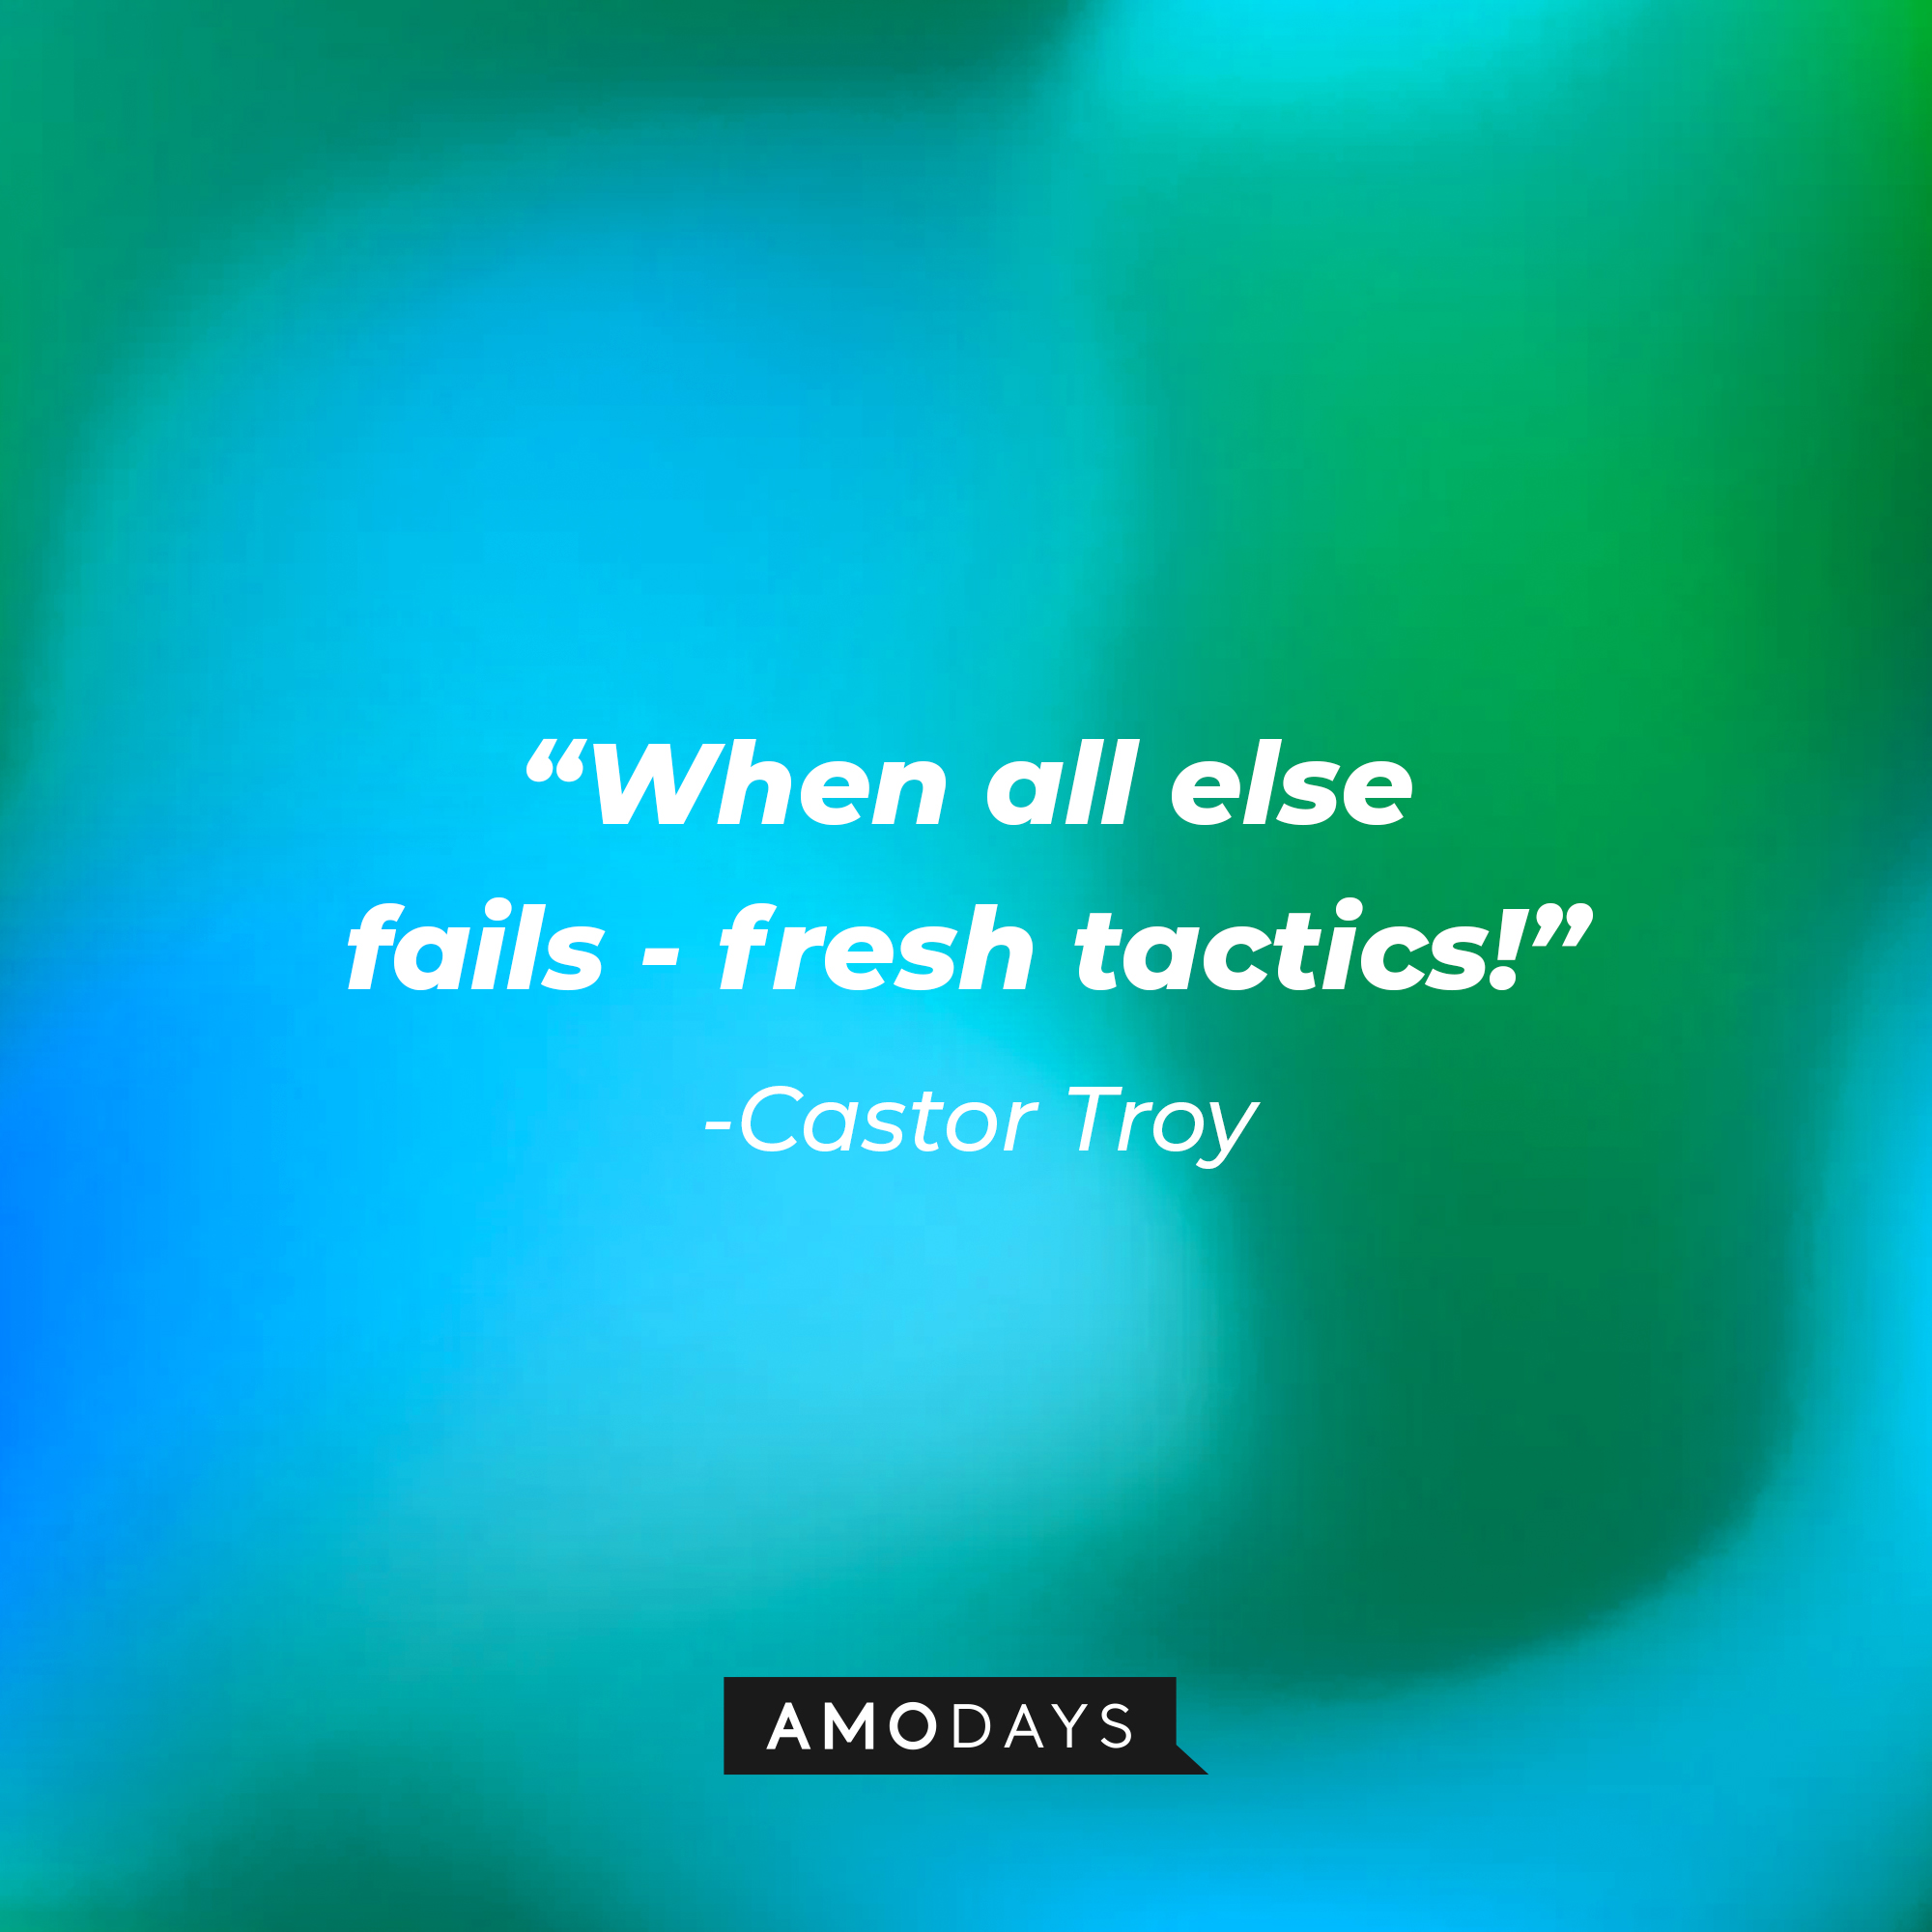 Castor Troy's quote: “When all else fails - fresh tactics!” : Source: Amodays